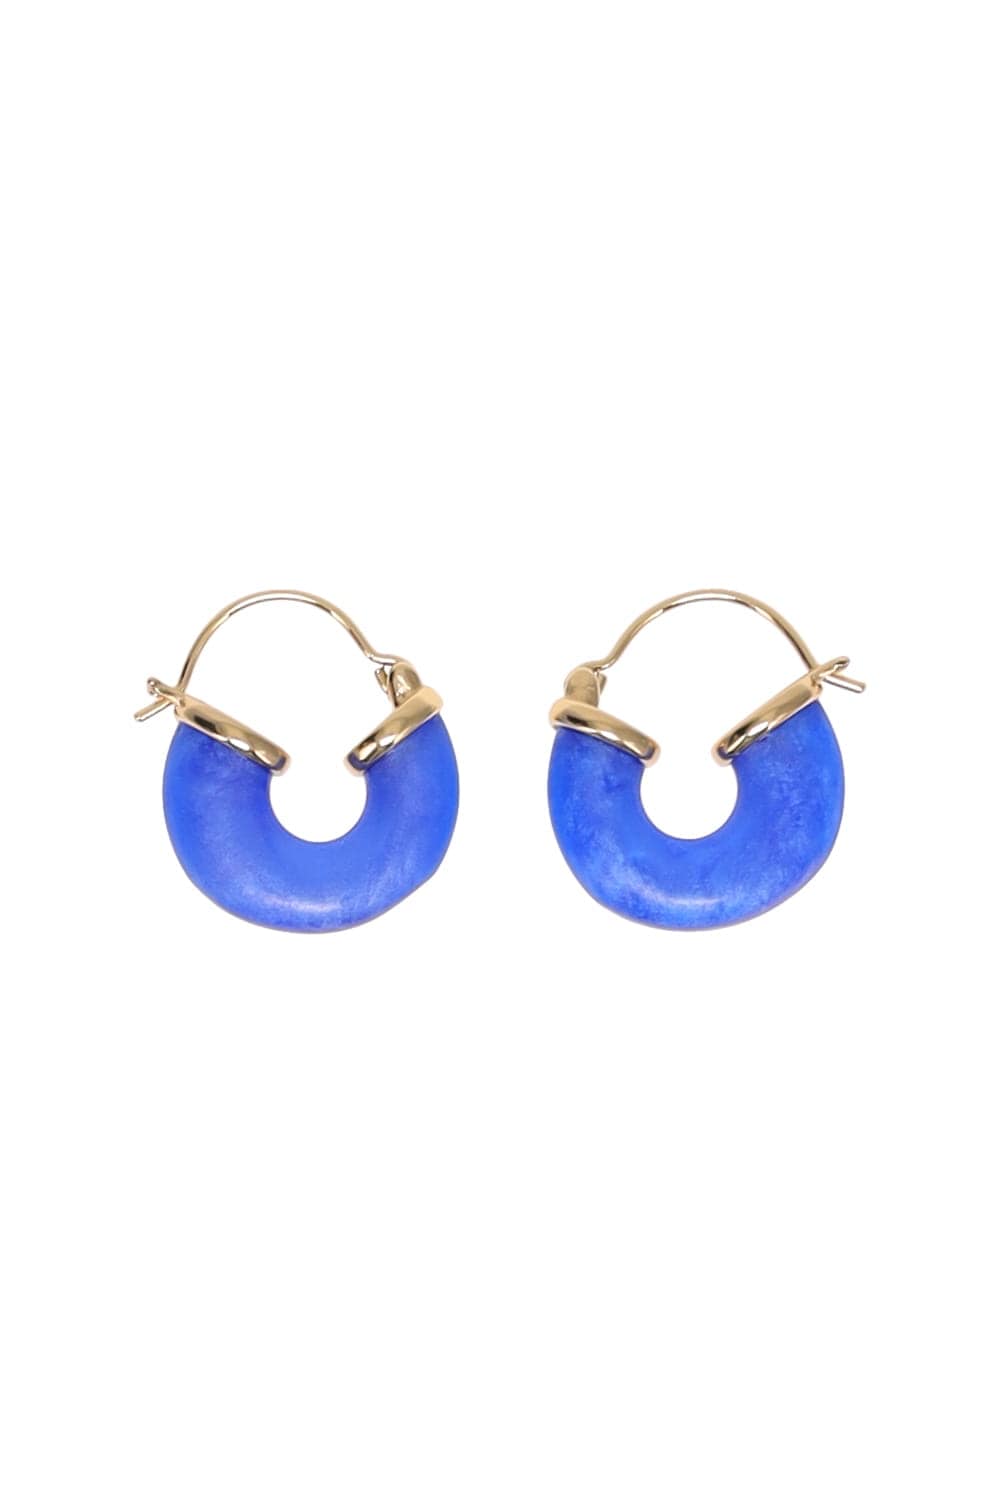 Anni Lu Petit Swell Deep Blue Hoop Earrings